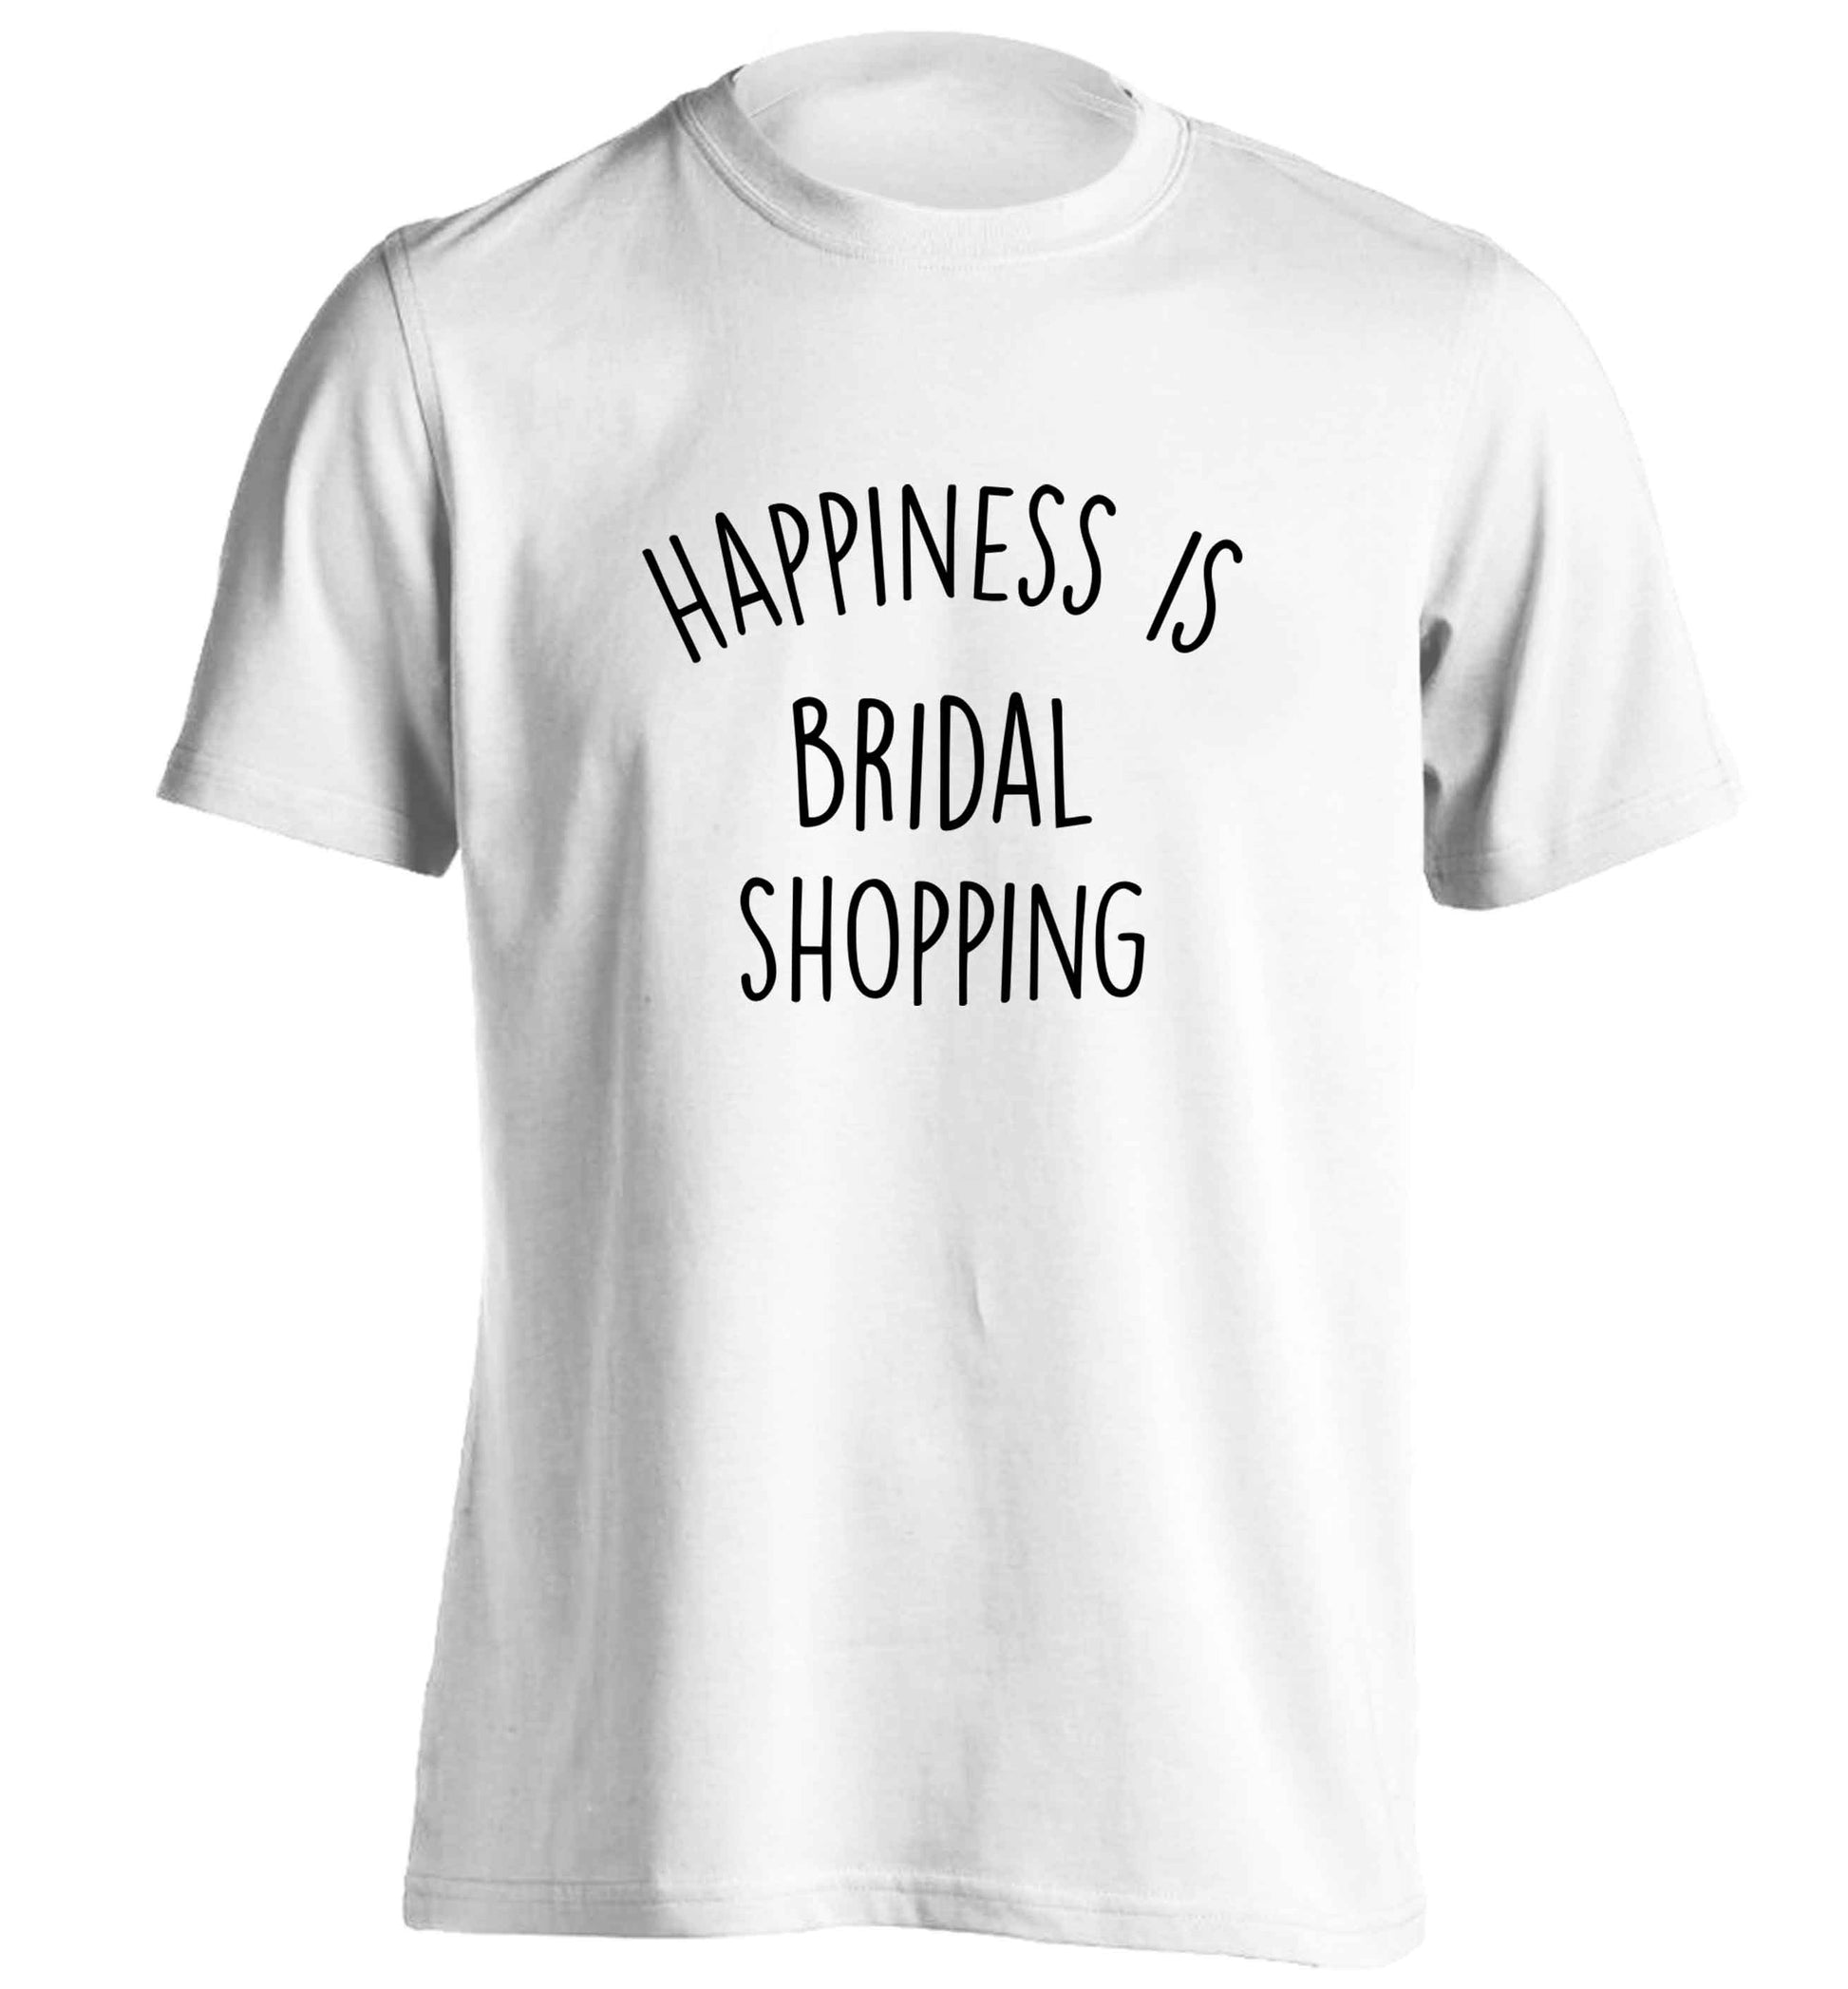 Happiness is bridal shopping adults unisex white Tshirt 2XL